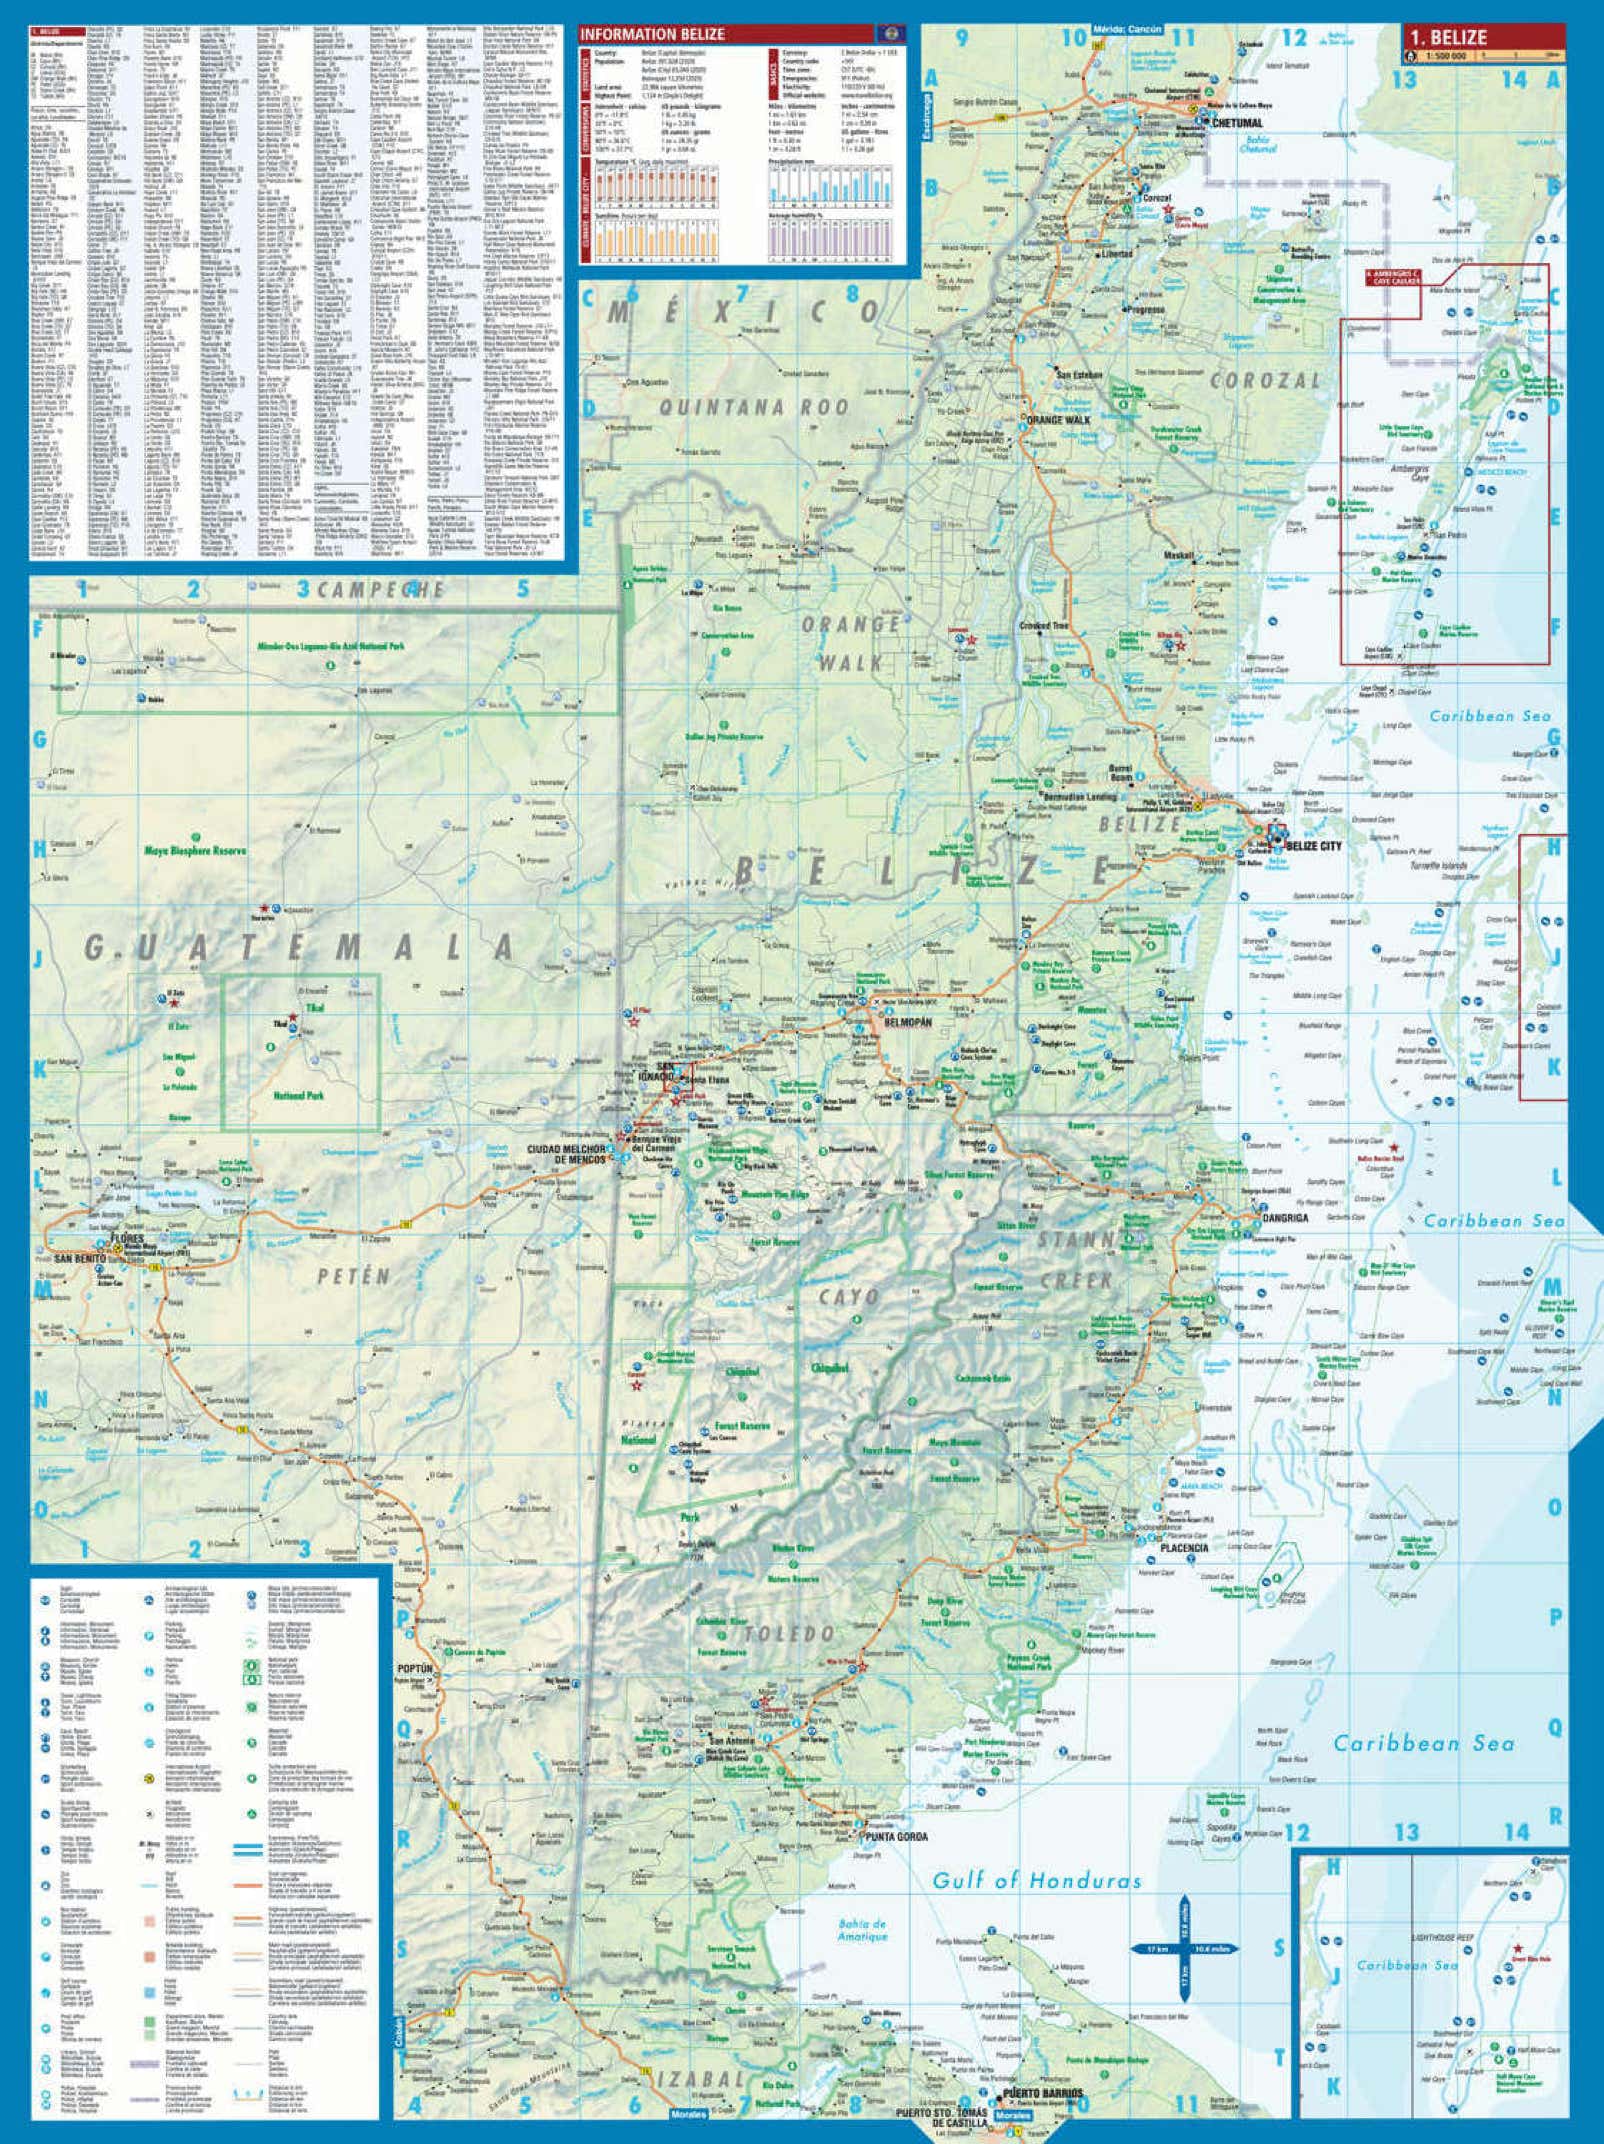 Belize Borch Map - page 2